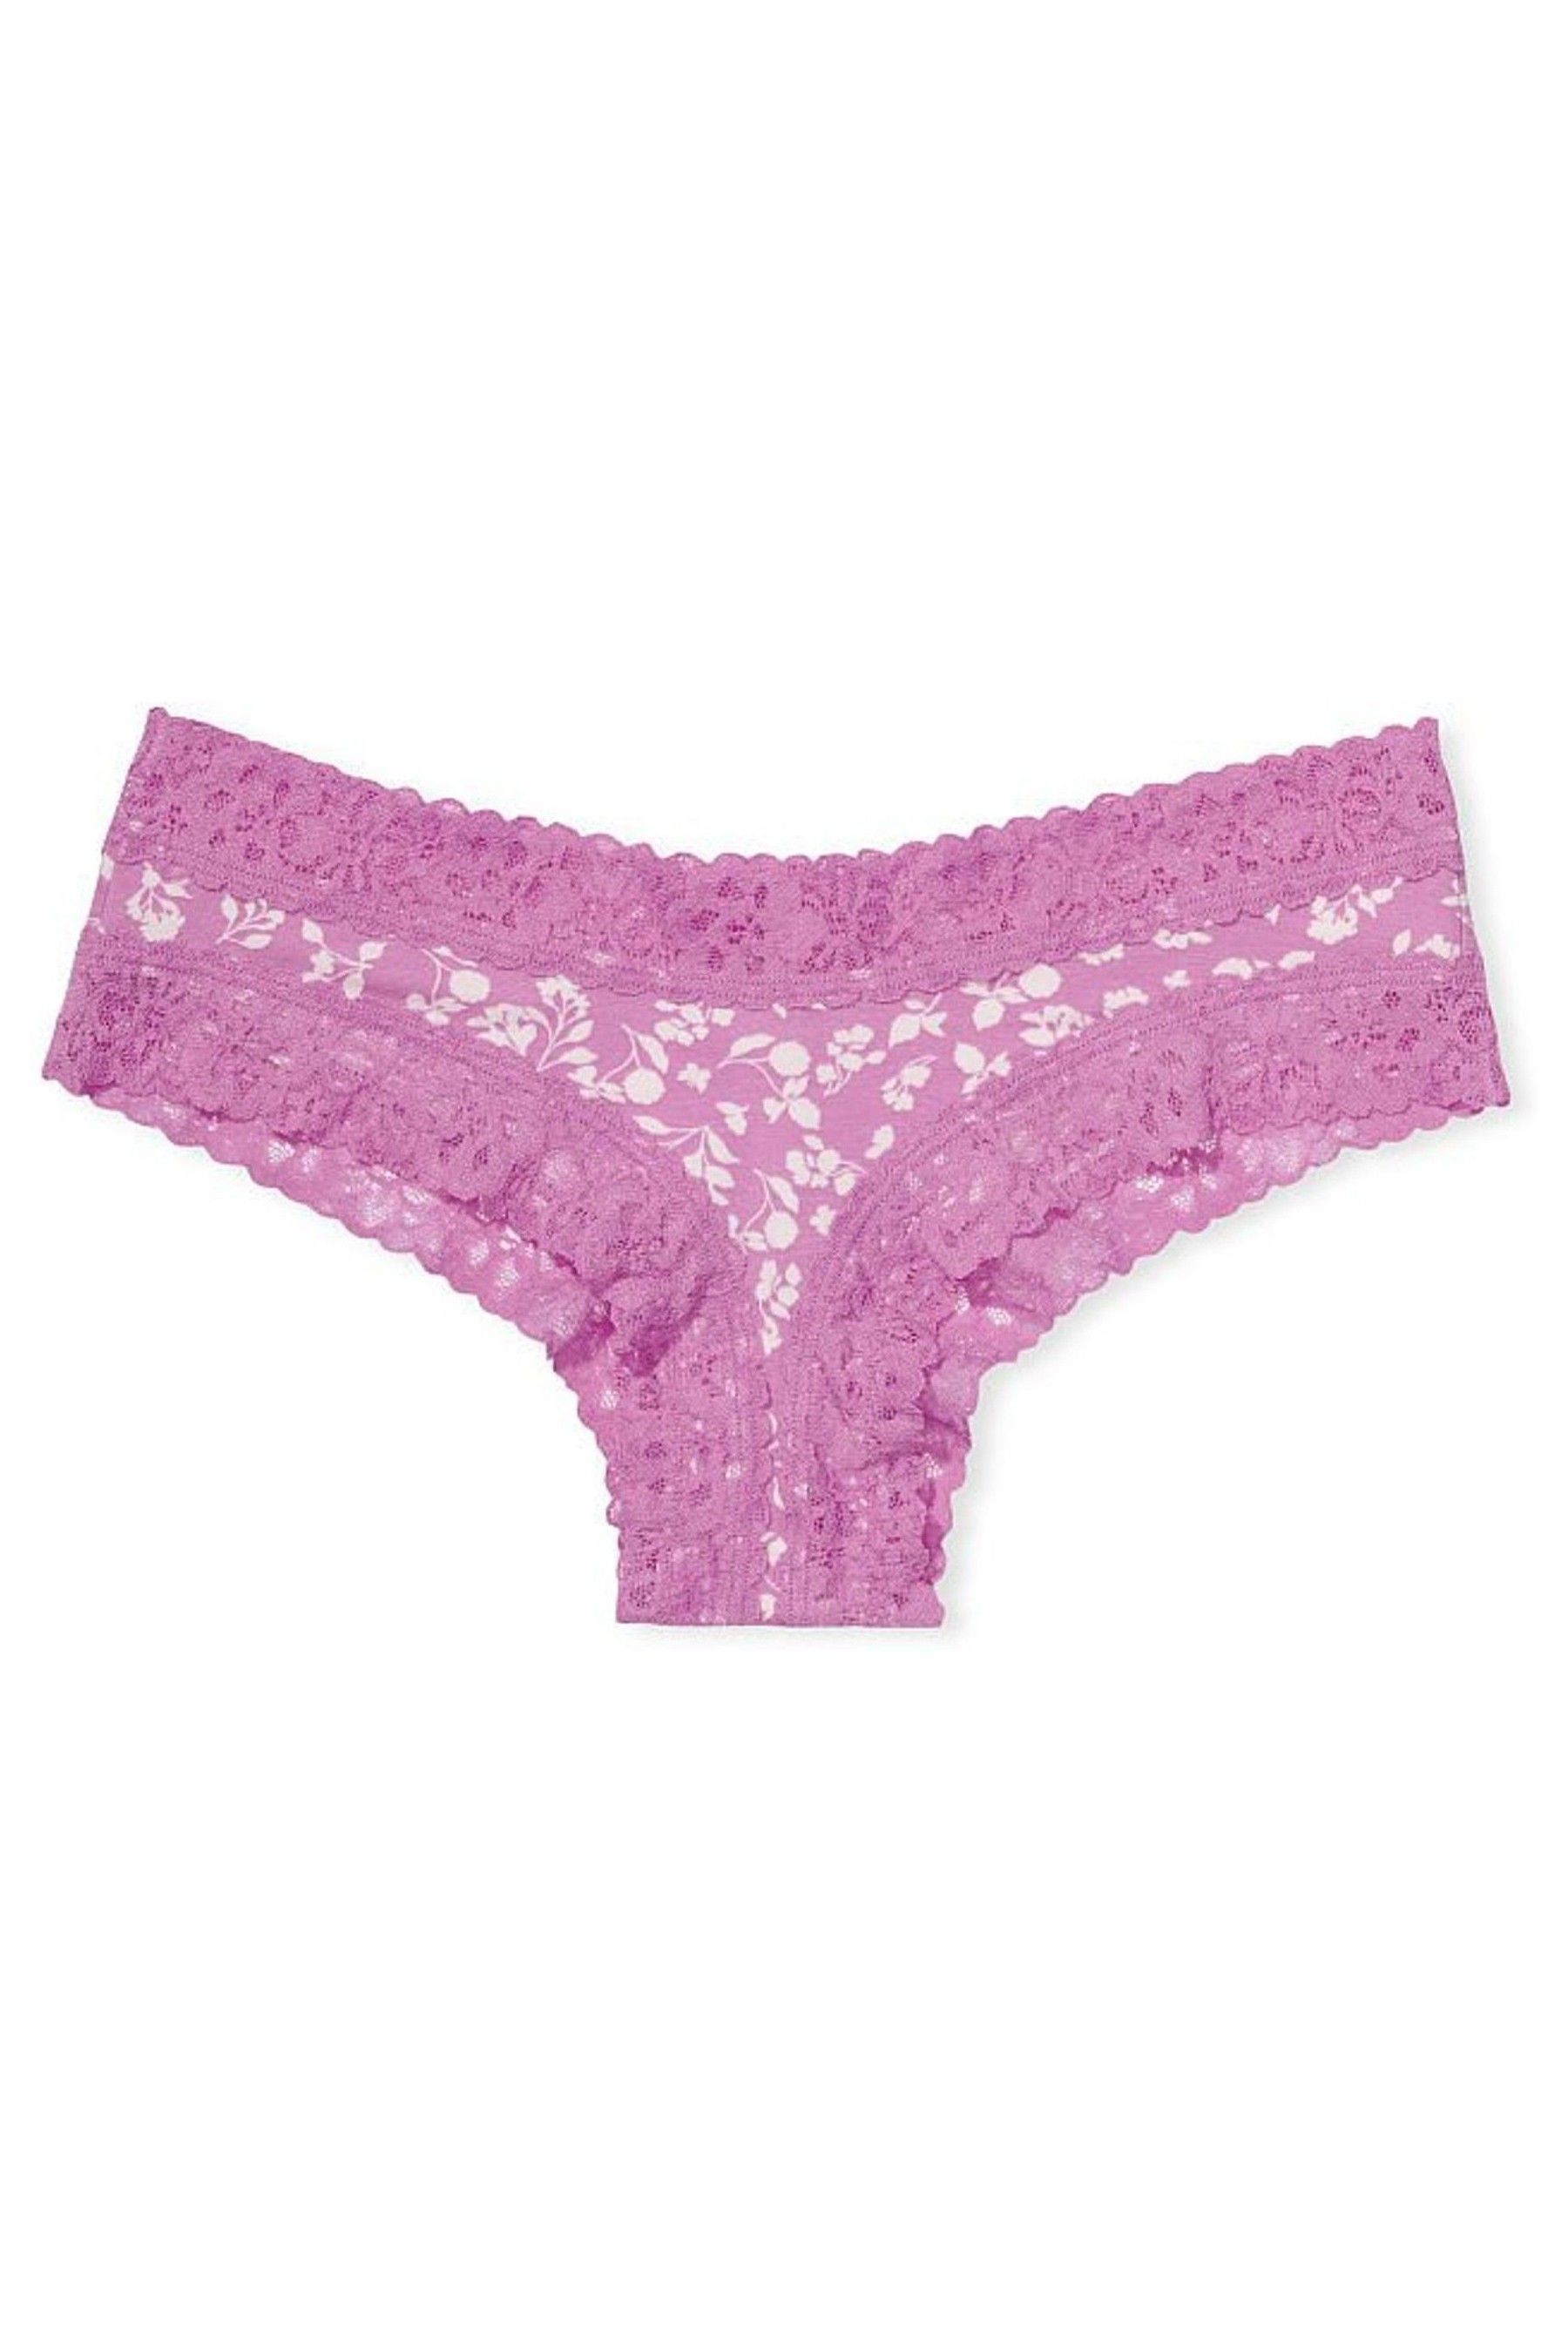 Buy Victoria S Secret Lace Waist Cotton Cheeky Panty From The Victoria S Secret Uk Online Shop